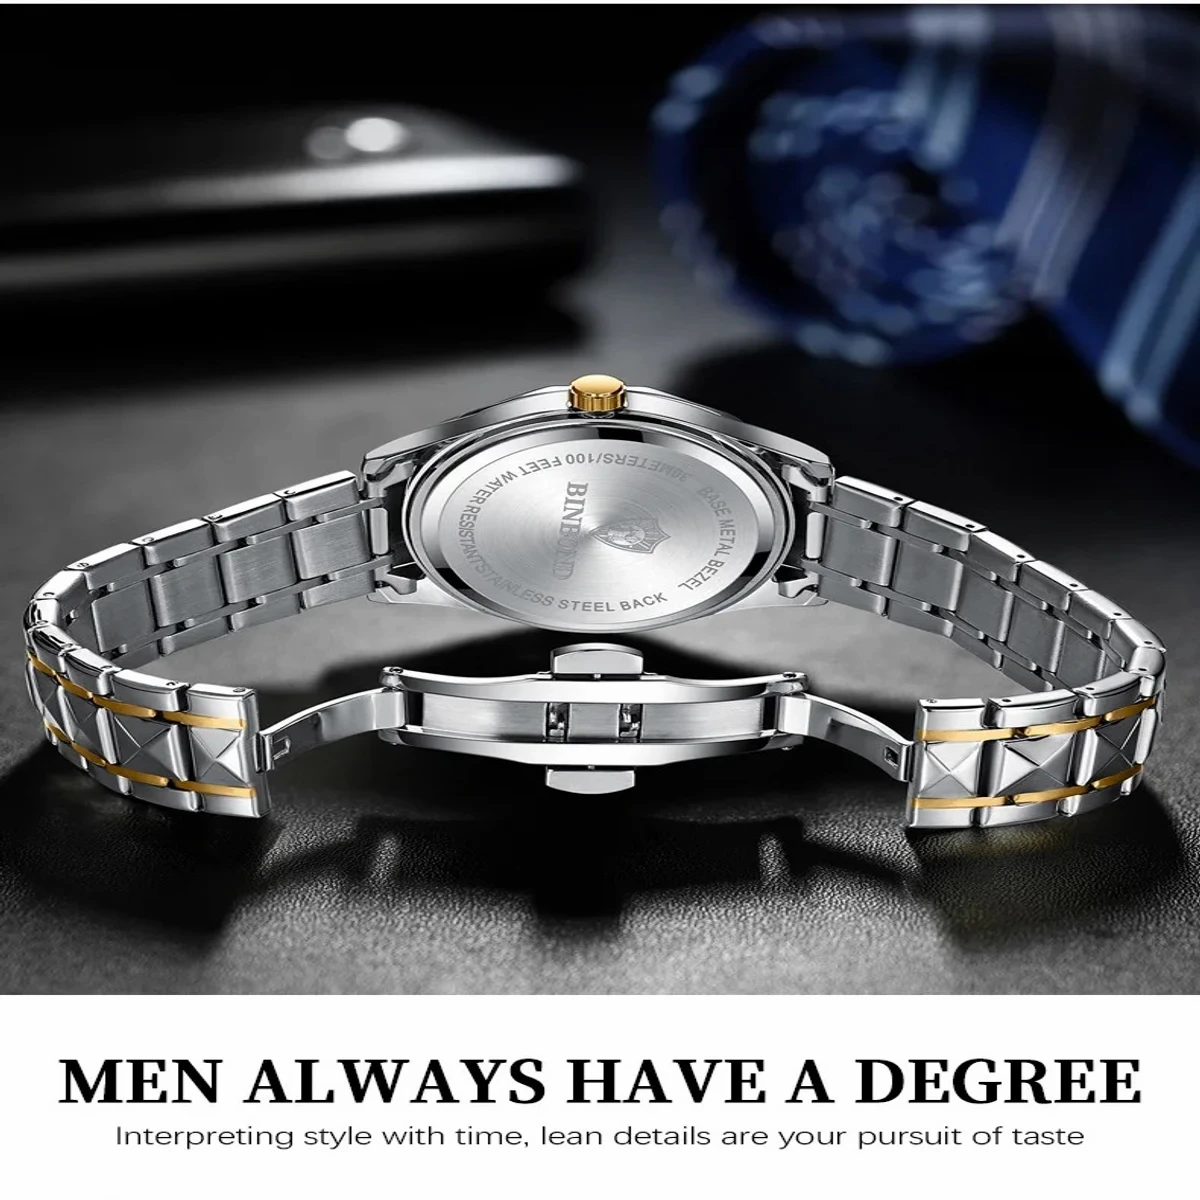 Luxury Binbond authentic men's watch waterproof night light dual calendar watch men's quartz watch diamond ceiling glass- Black & Golden